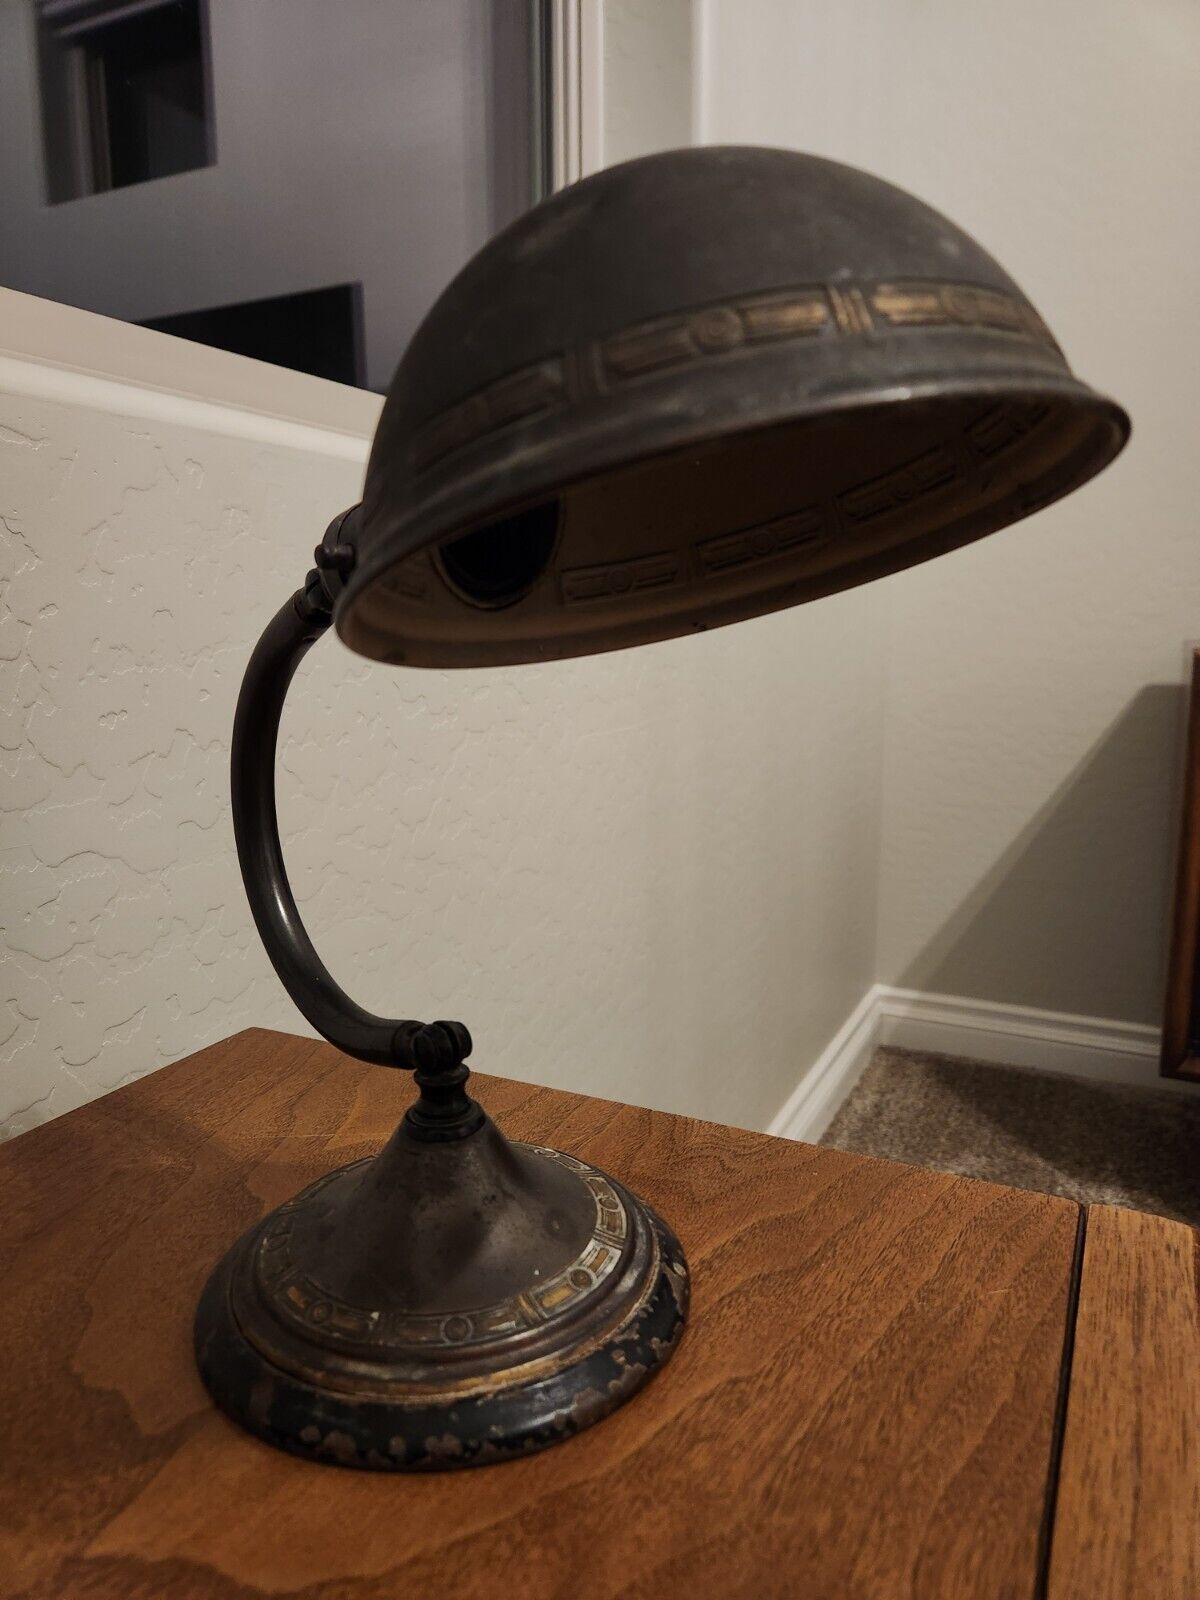 1930's Greist Adjustable Desk Lamp - All Original(?) - Needs Rewire